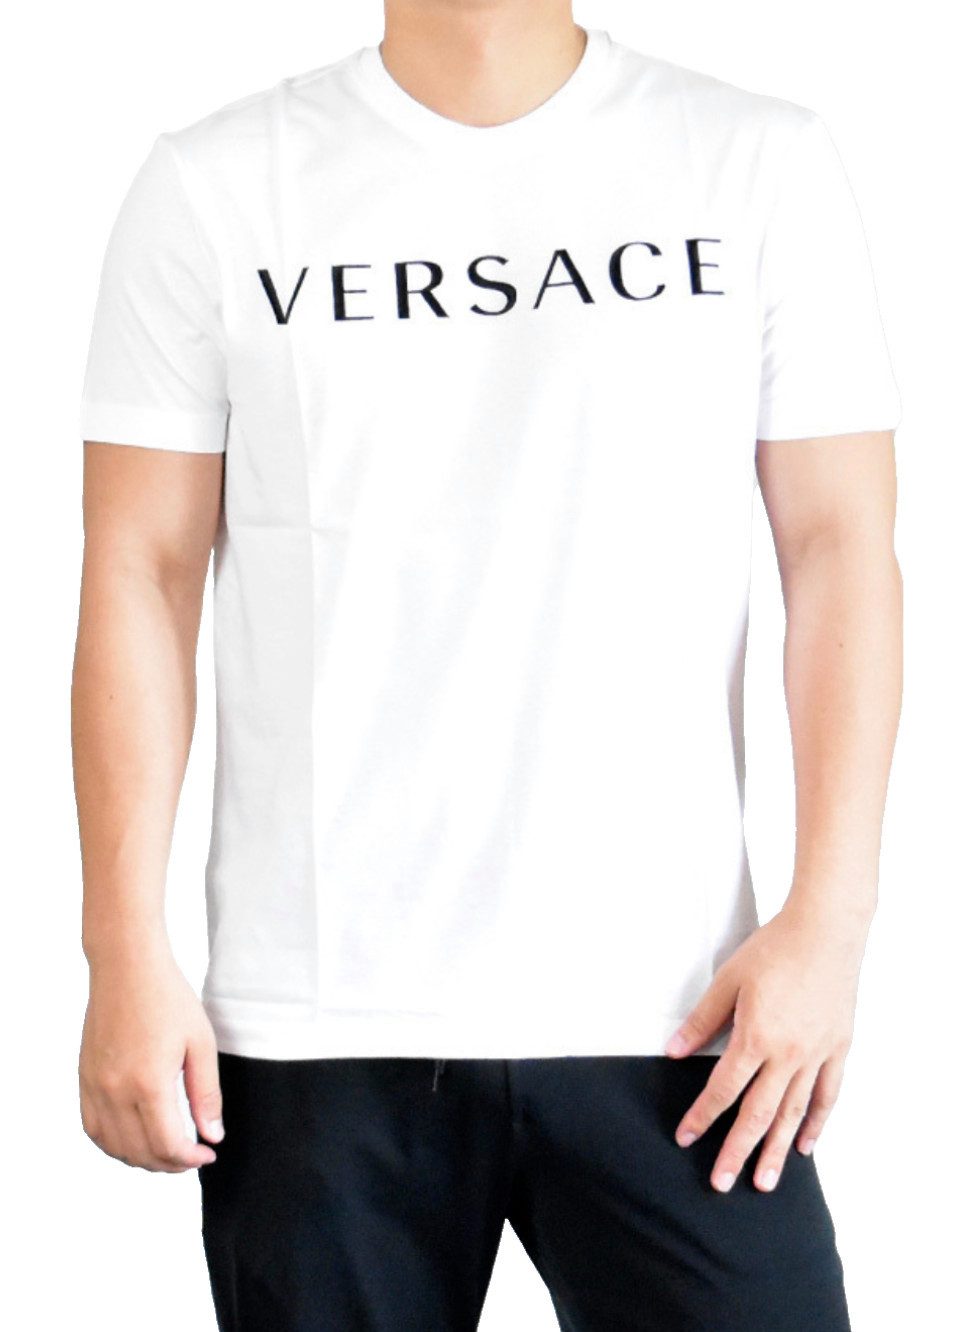 Versace T-Shirt T-Shirt C Mainline Embroidery Logo Cotton Retro Shirt Tee Top